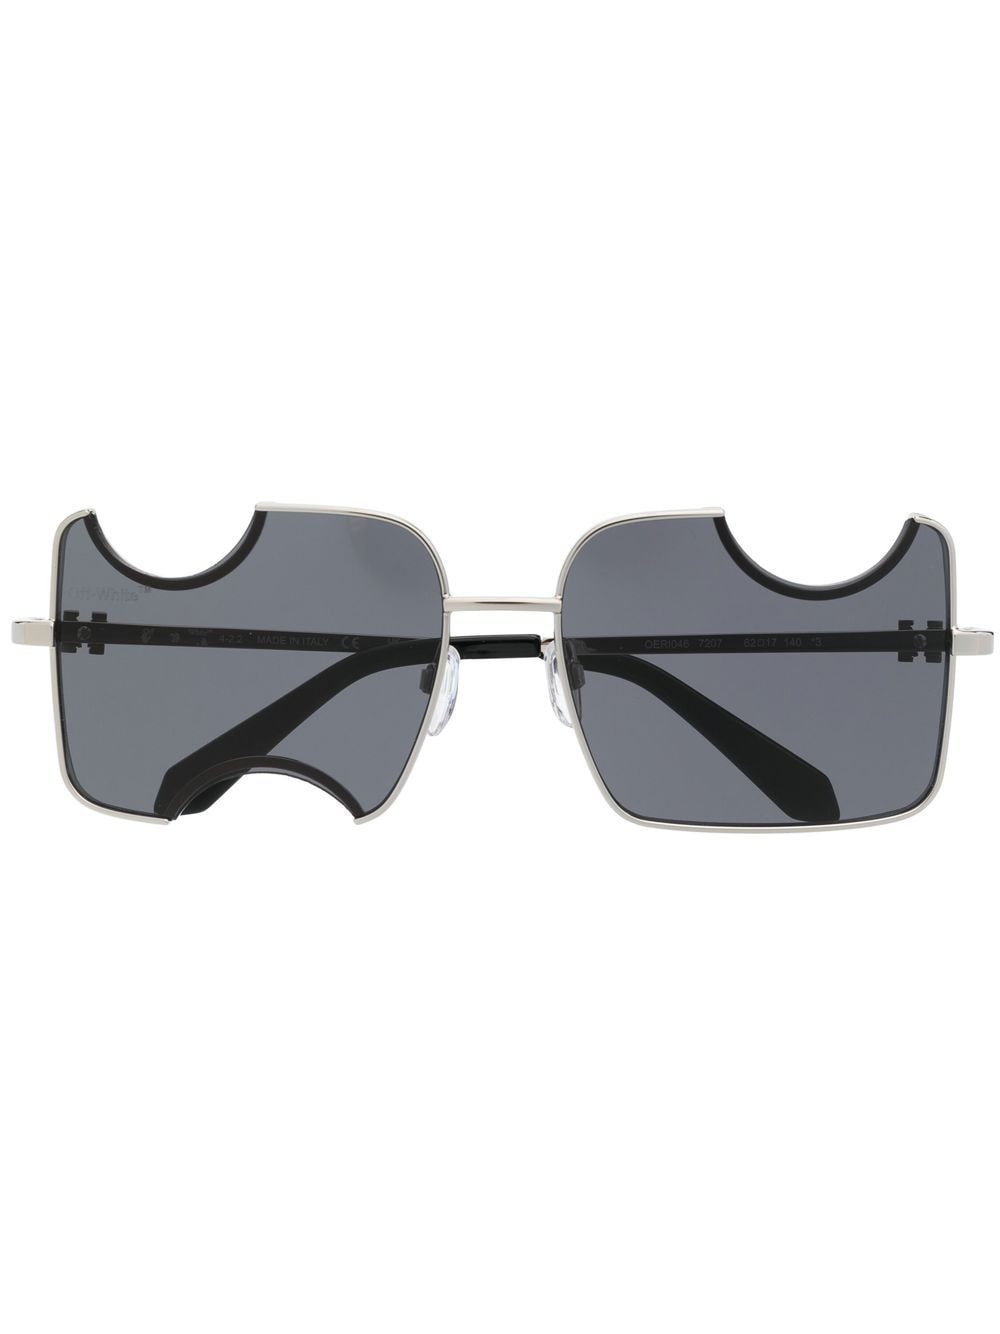 Salvador tinted sunglasses - 1